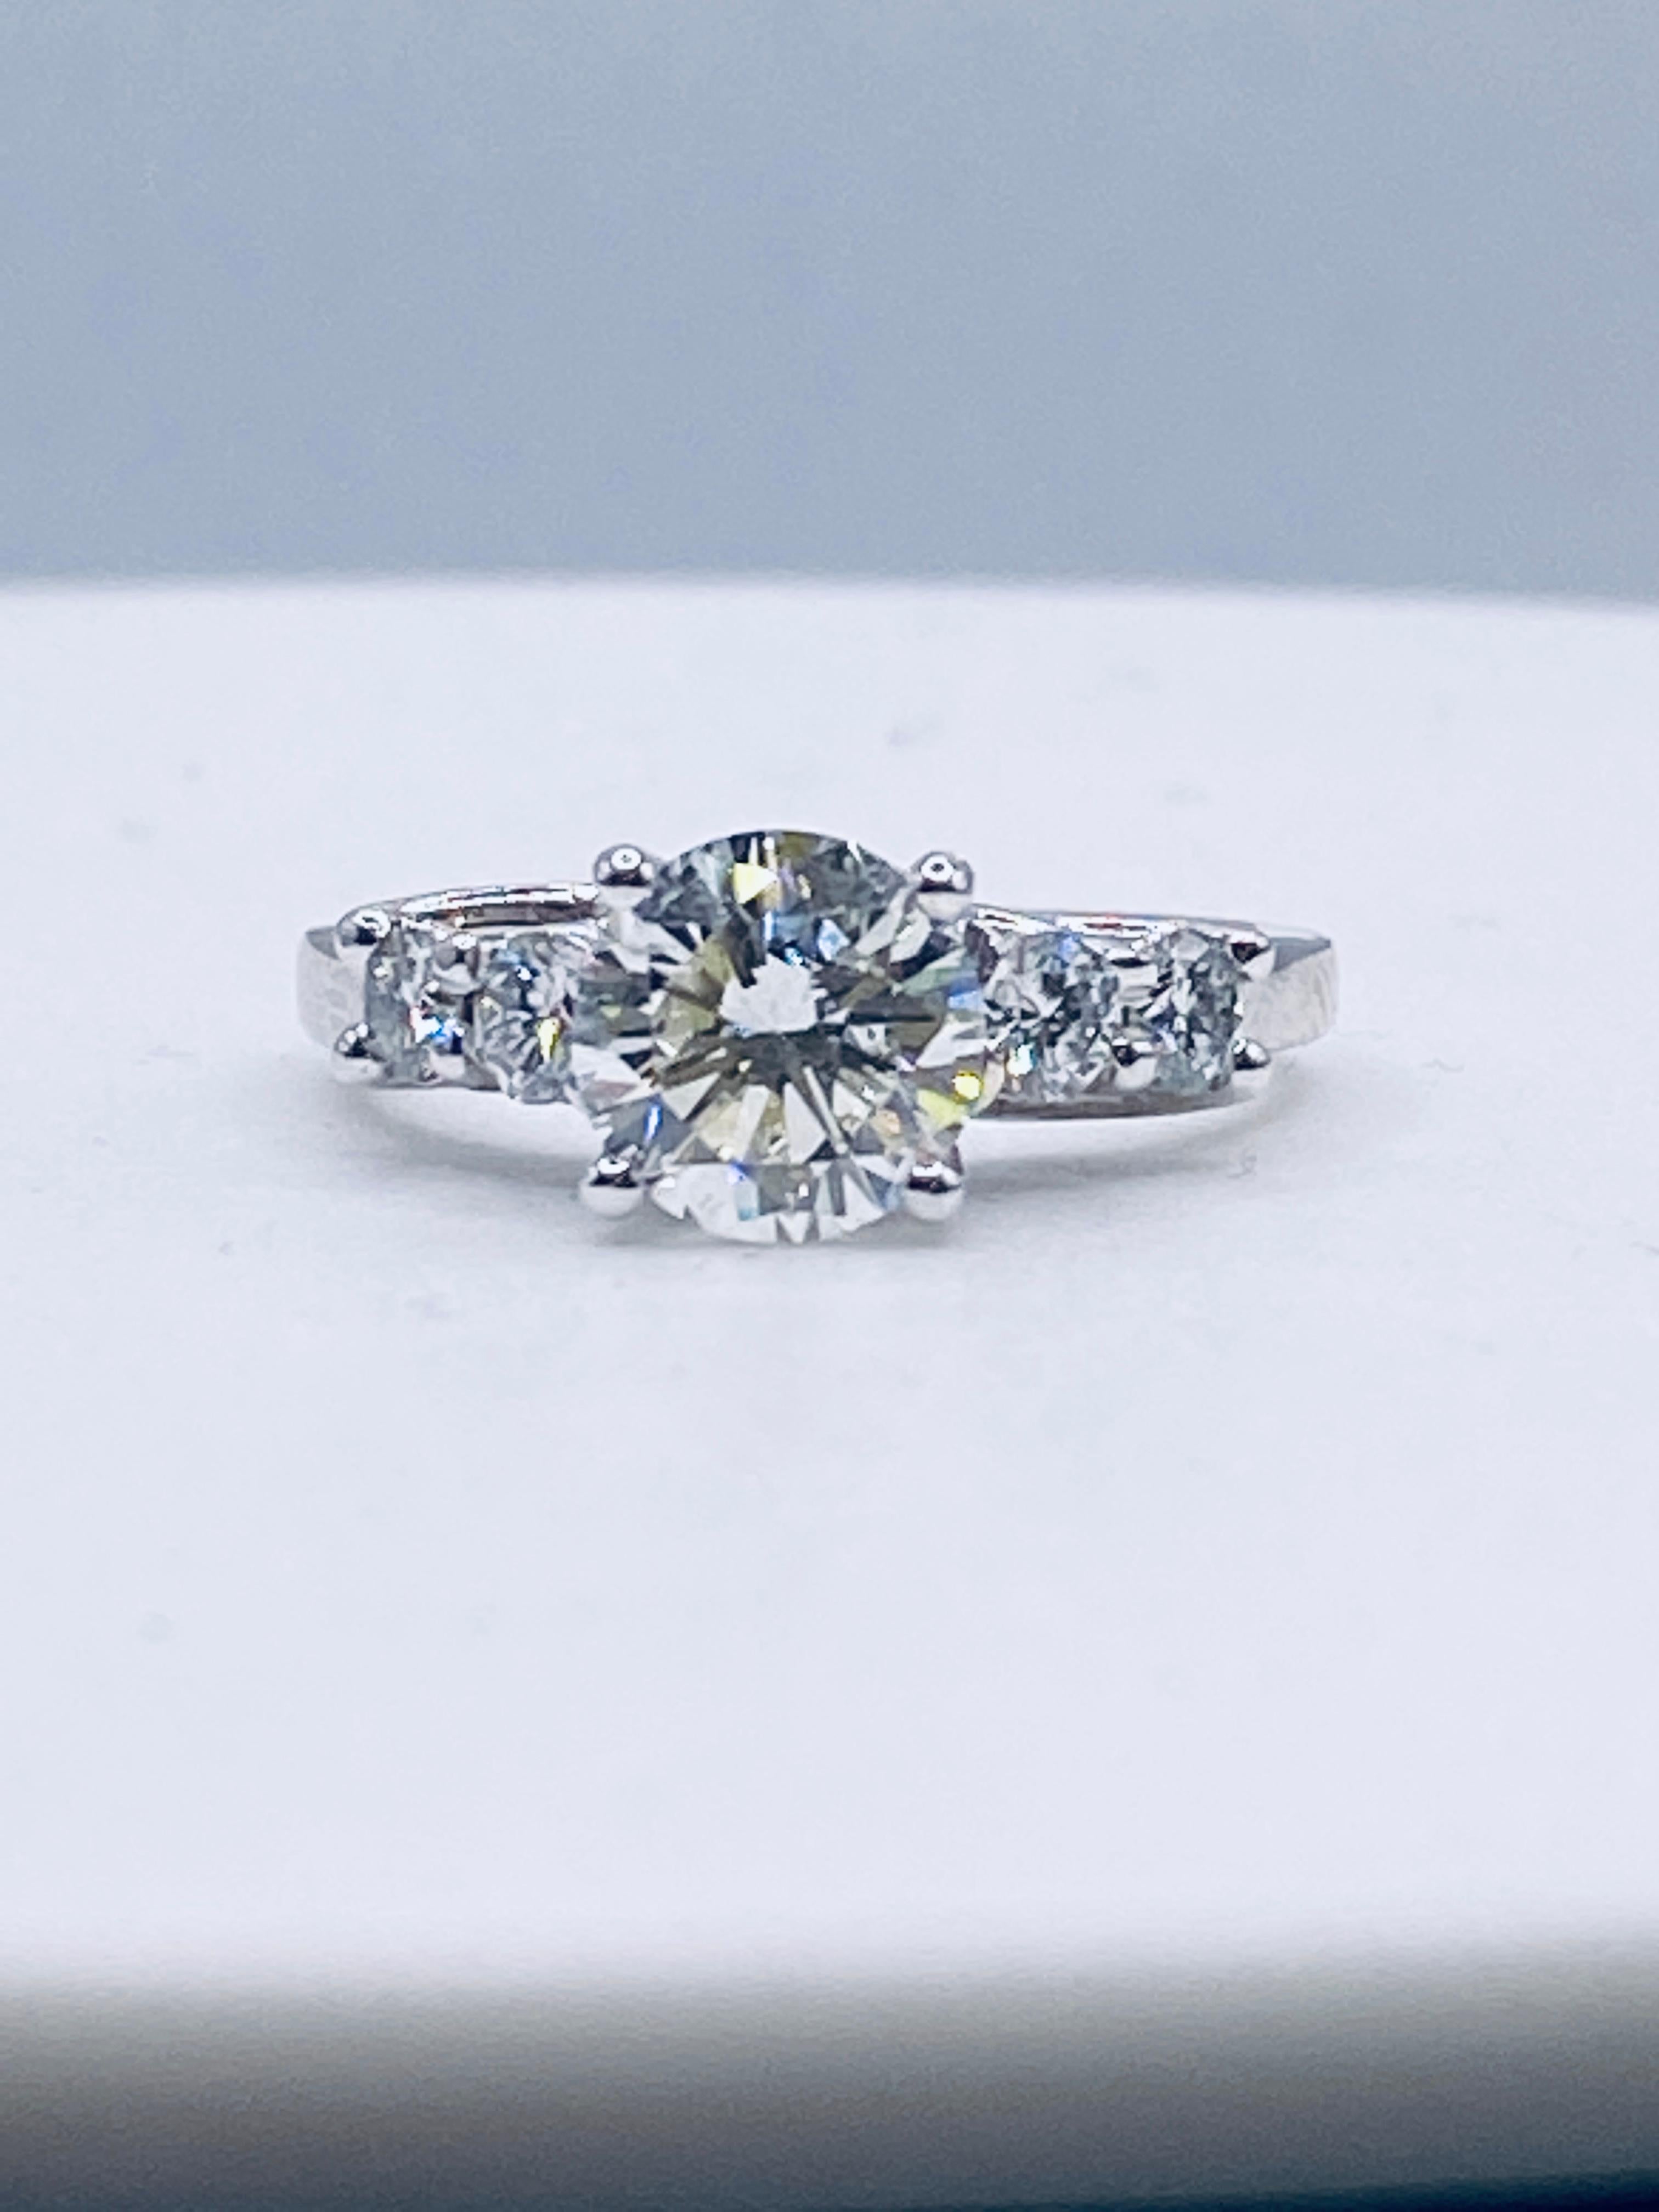 Brilliant Cut 1.59 Carat H SI2 Center Diamond Engagement Ring For Sale